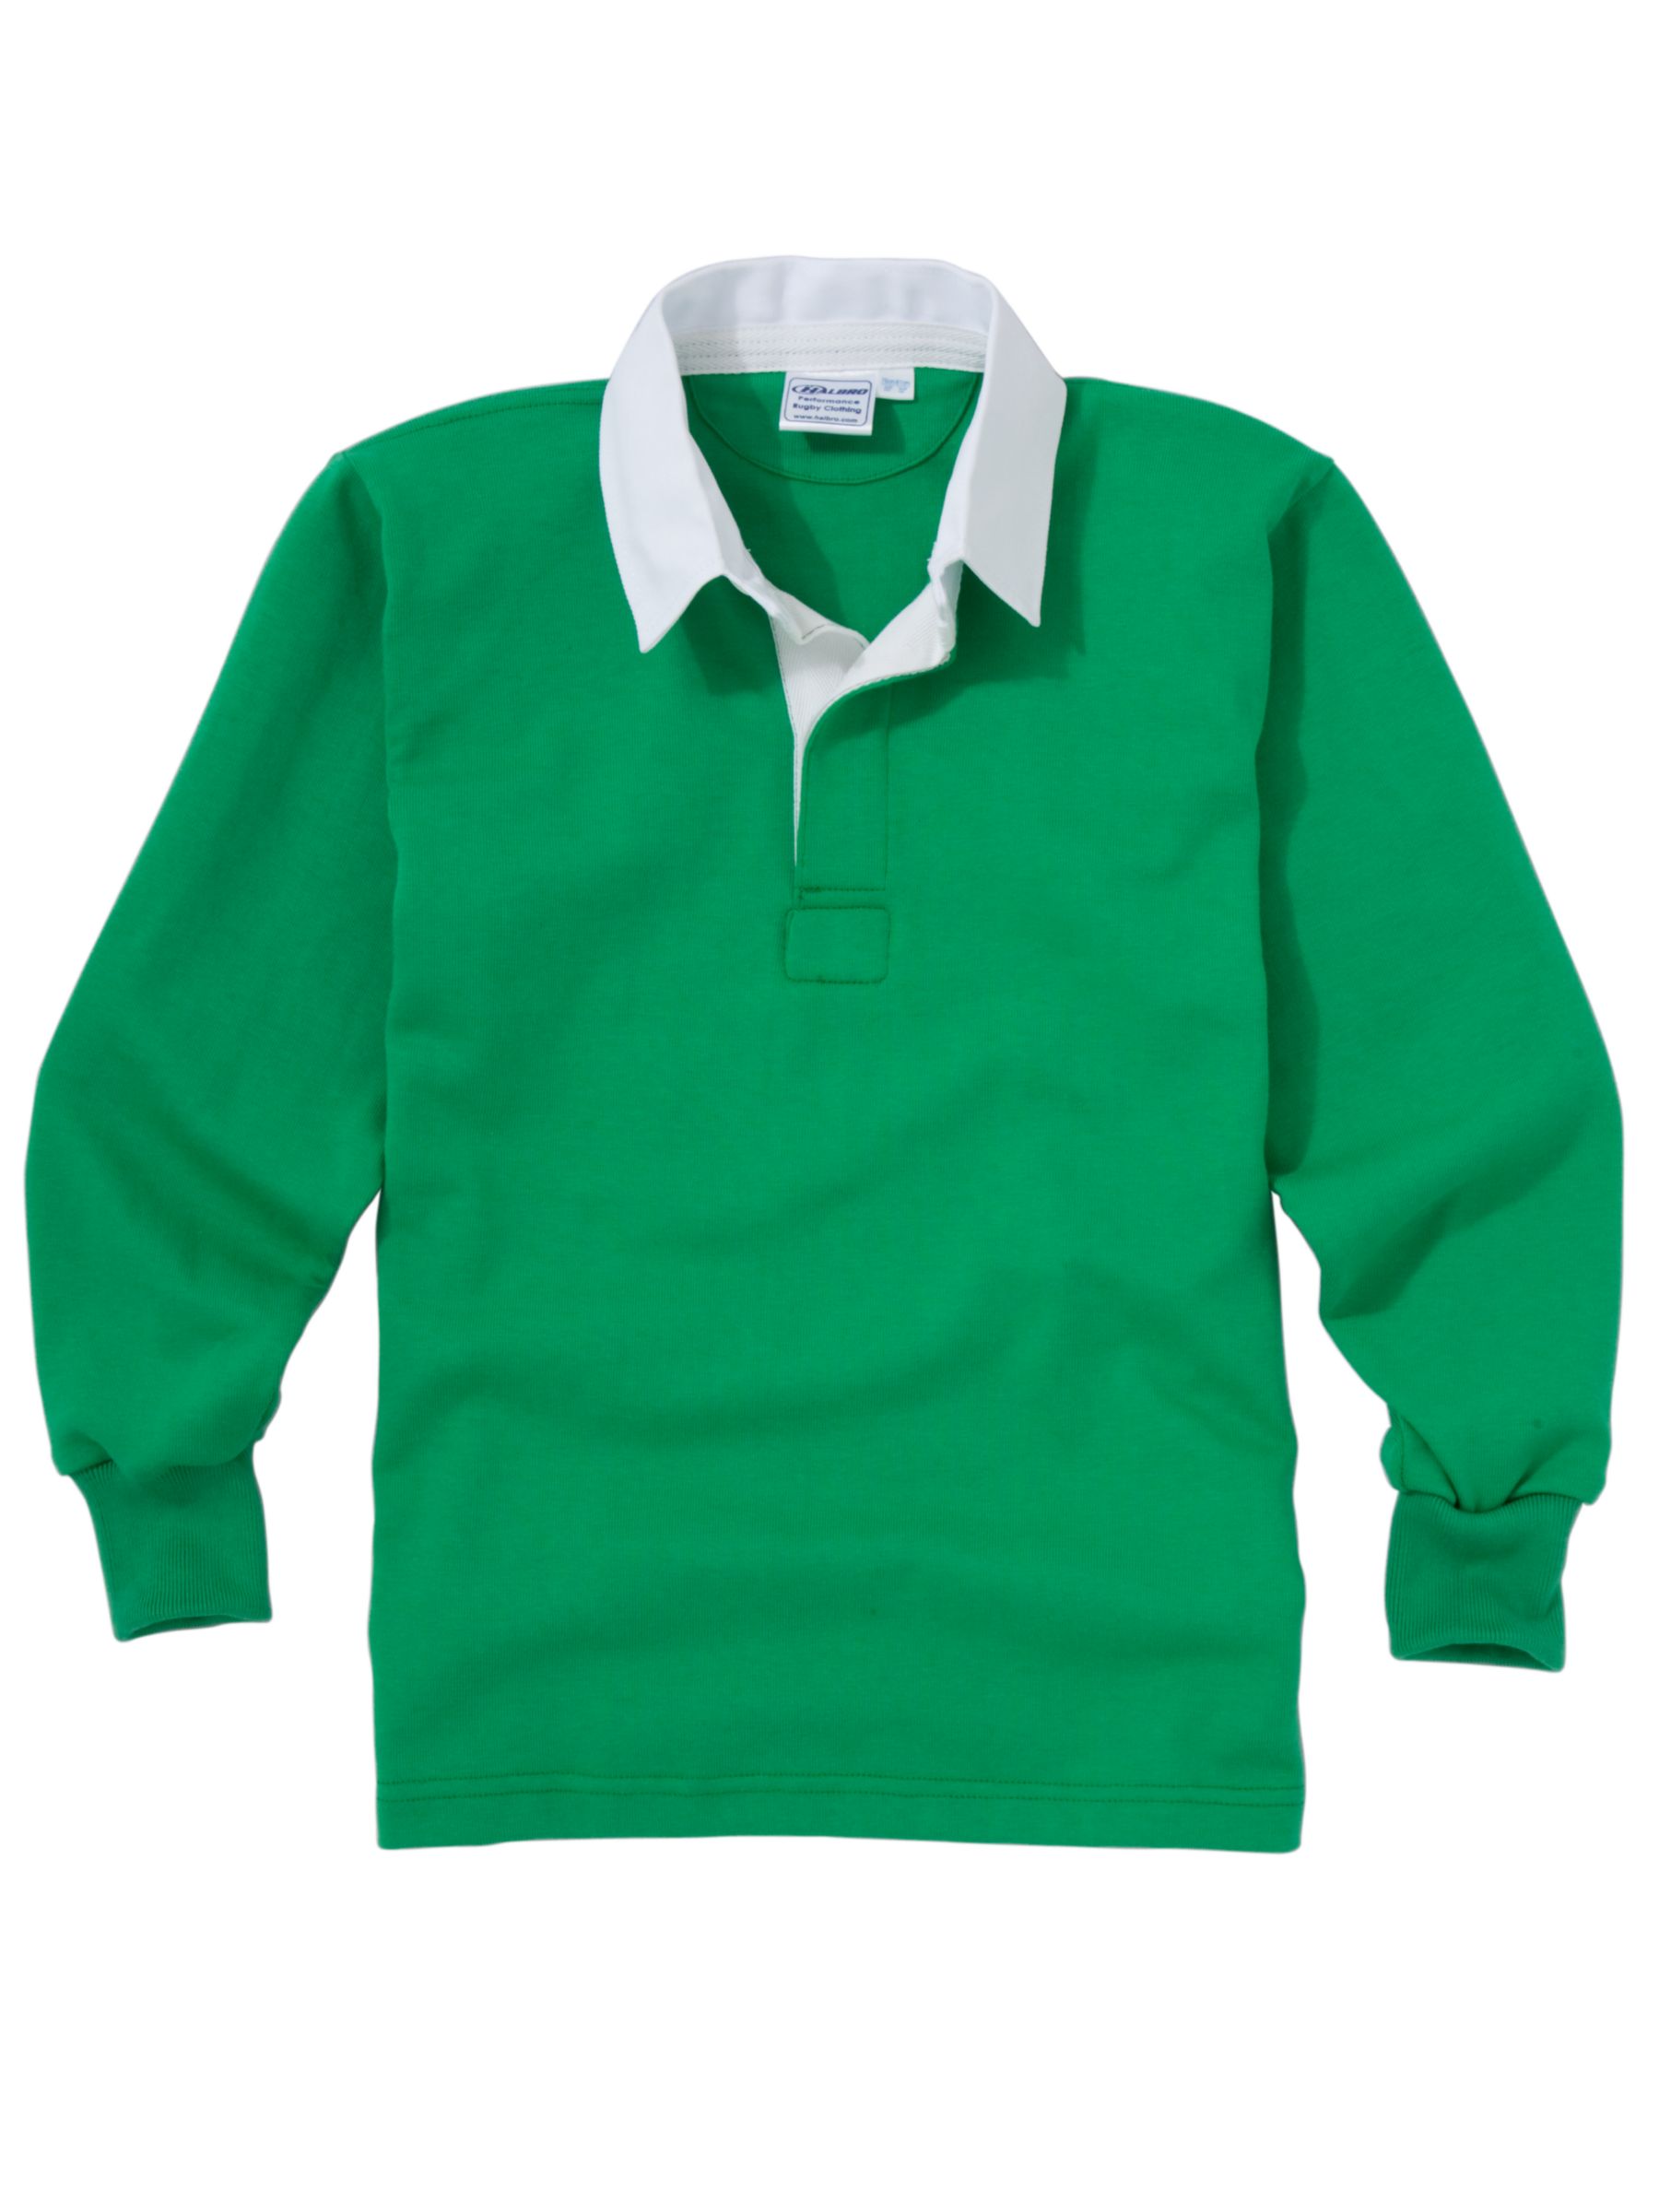 School Cotton Rugby Shirt, Emerald Green